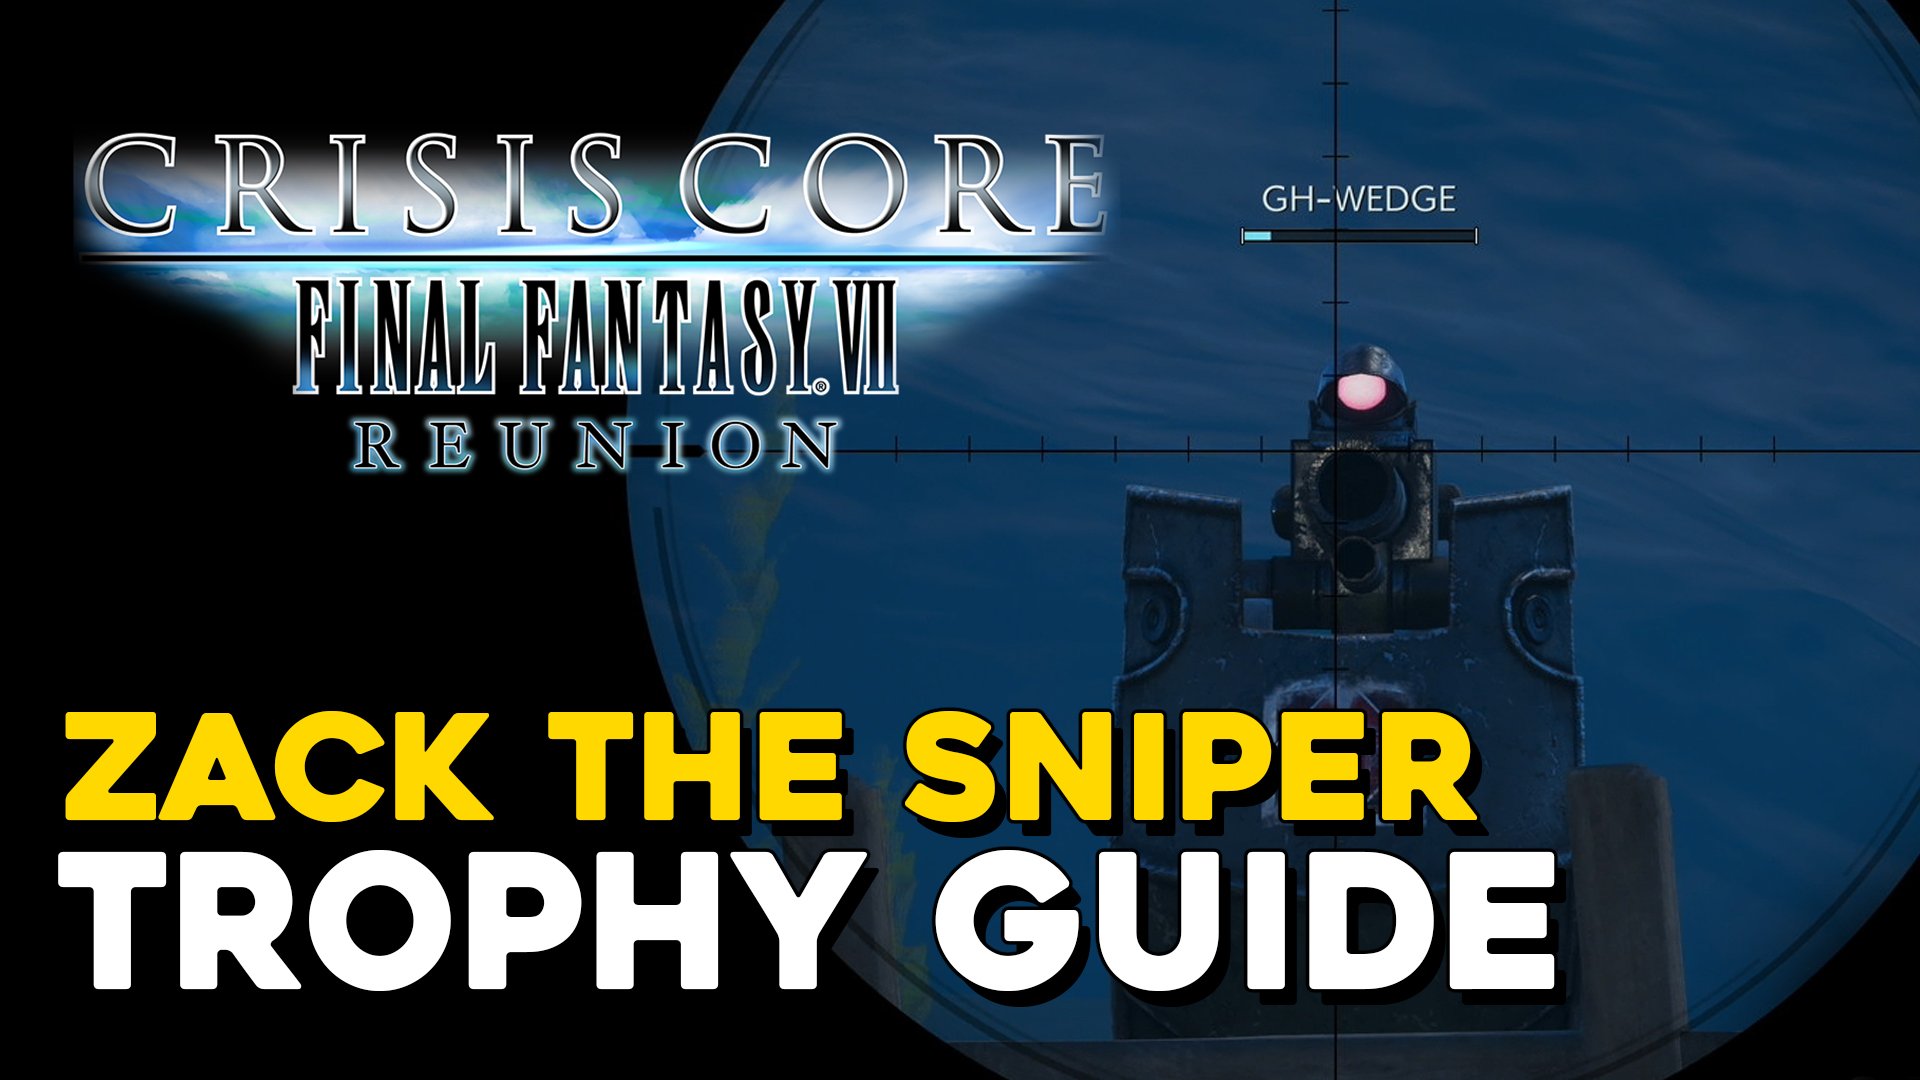 Crisis Core Final Fantasy 7 Reunion Zack The Sniper Trophy Guide.jpg